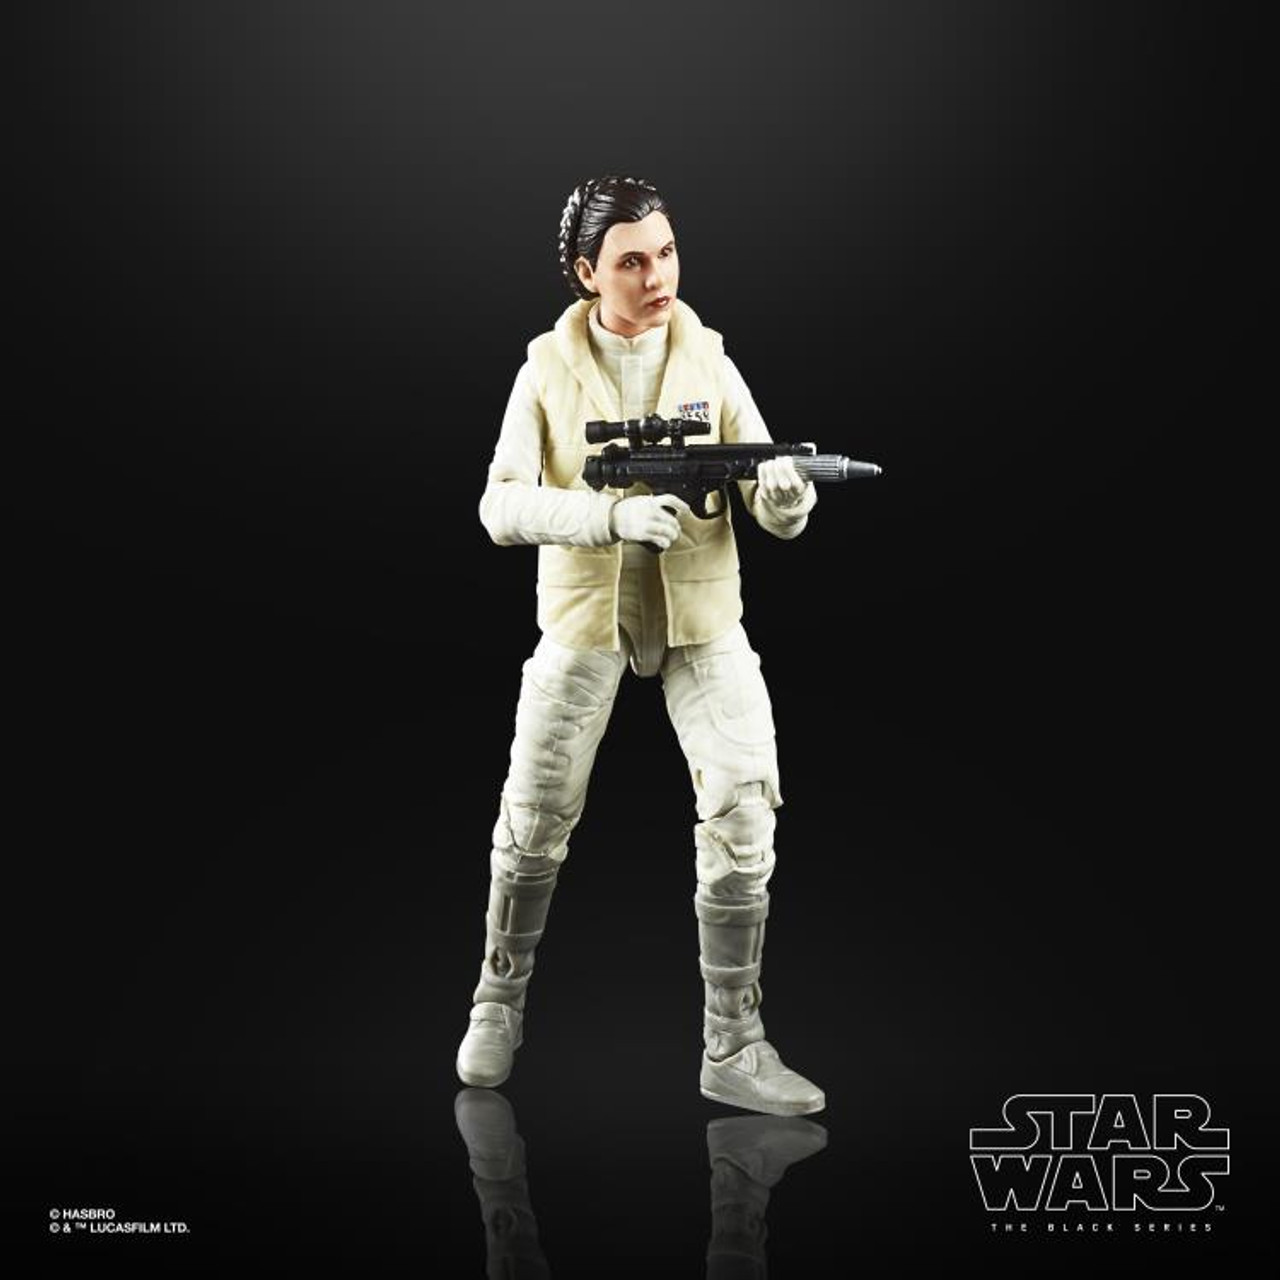 Star Wars The Empire Strikes Back 40th Anniversary ~ Princess Leia Organa (Hoth) 6" Action Figure